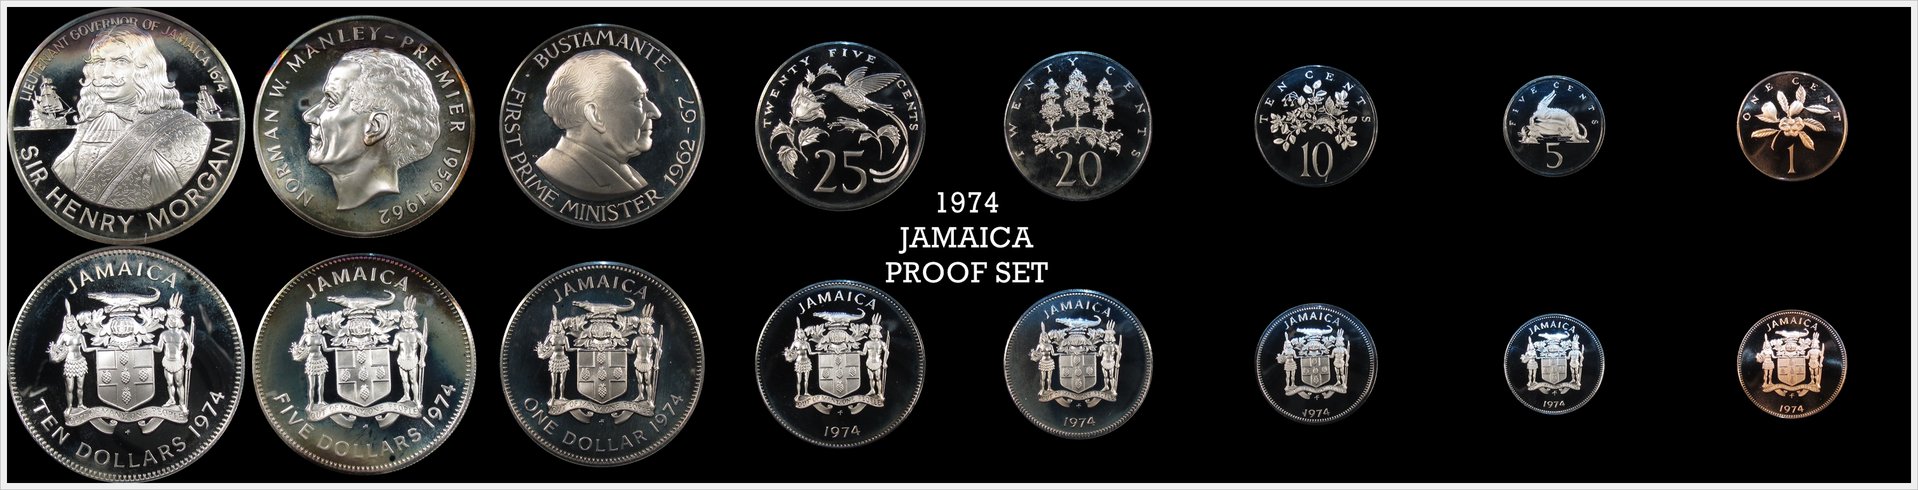 Jamaica 1974 Proof Set.jpg